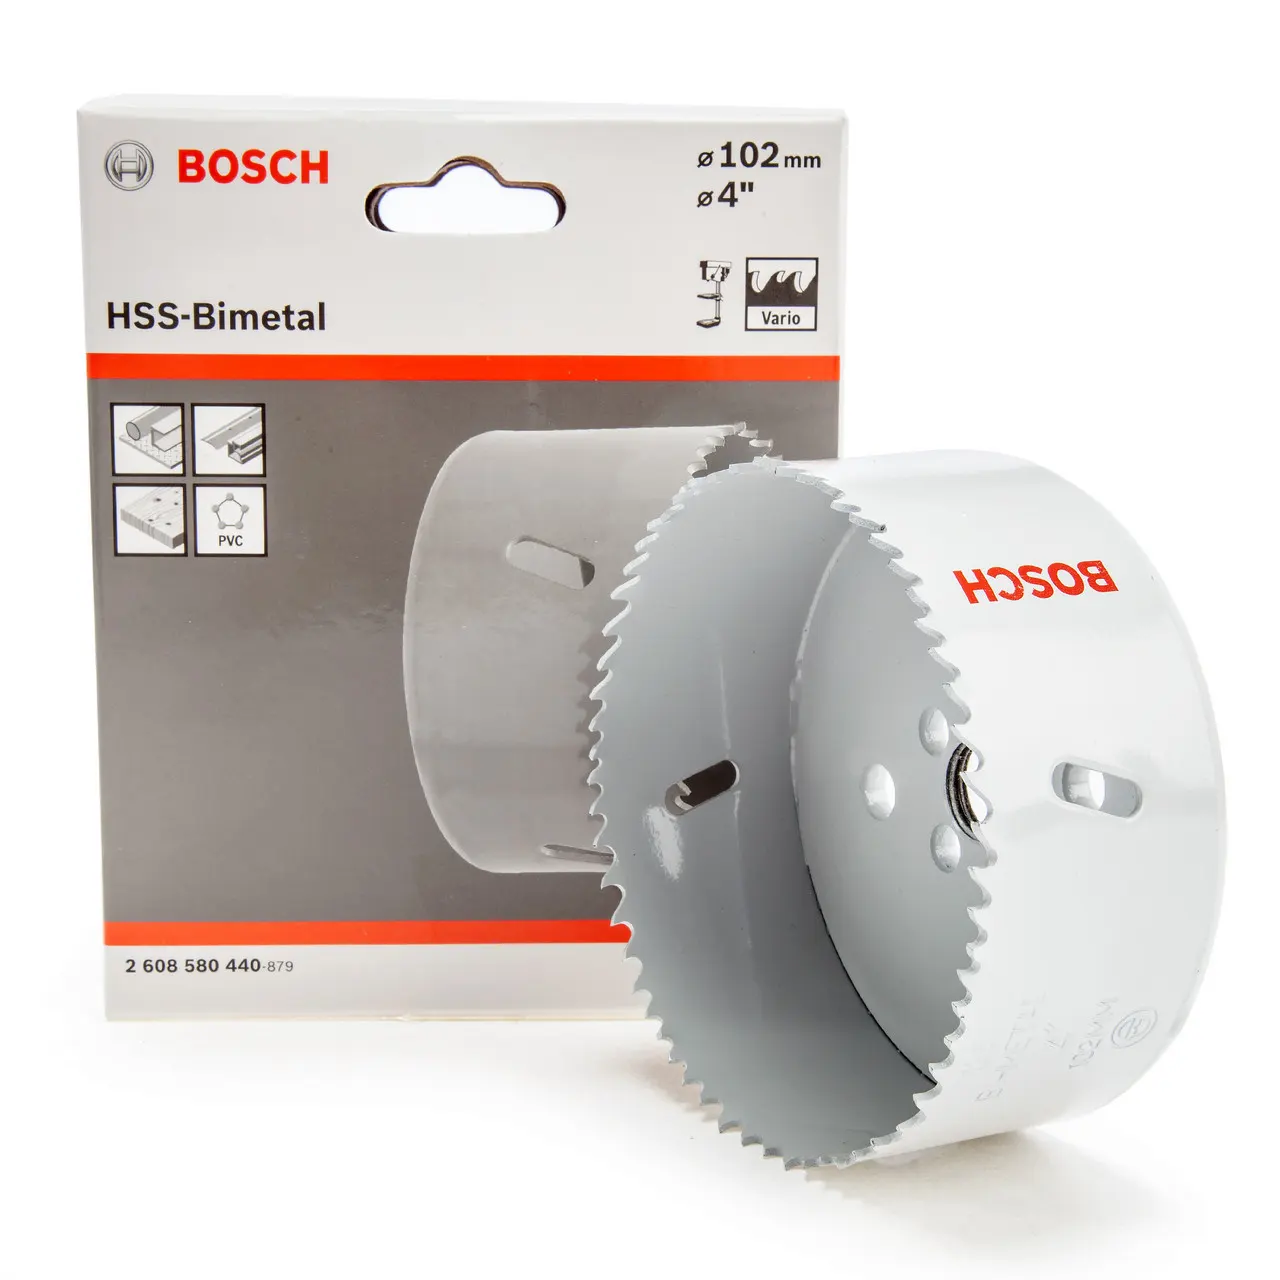 Bosch saw bit, 102 mm, 2 608 580 440